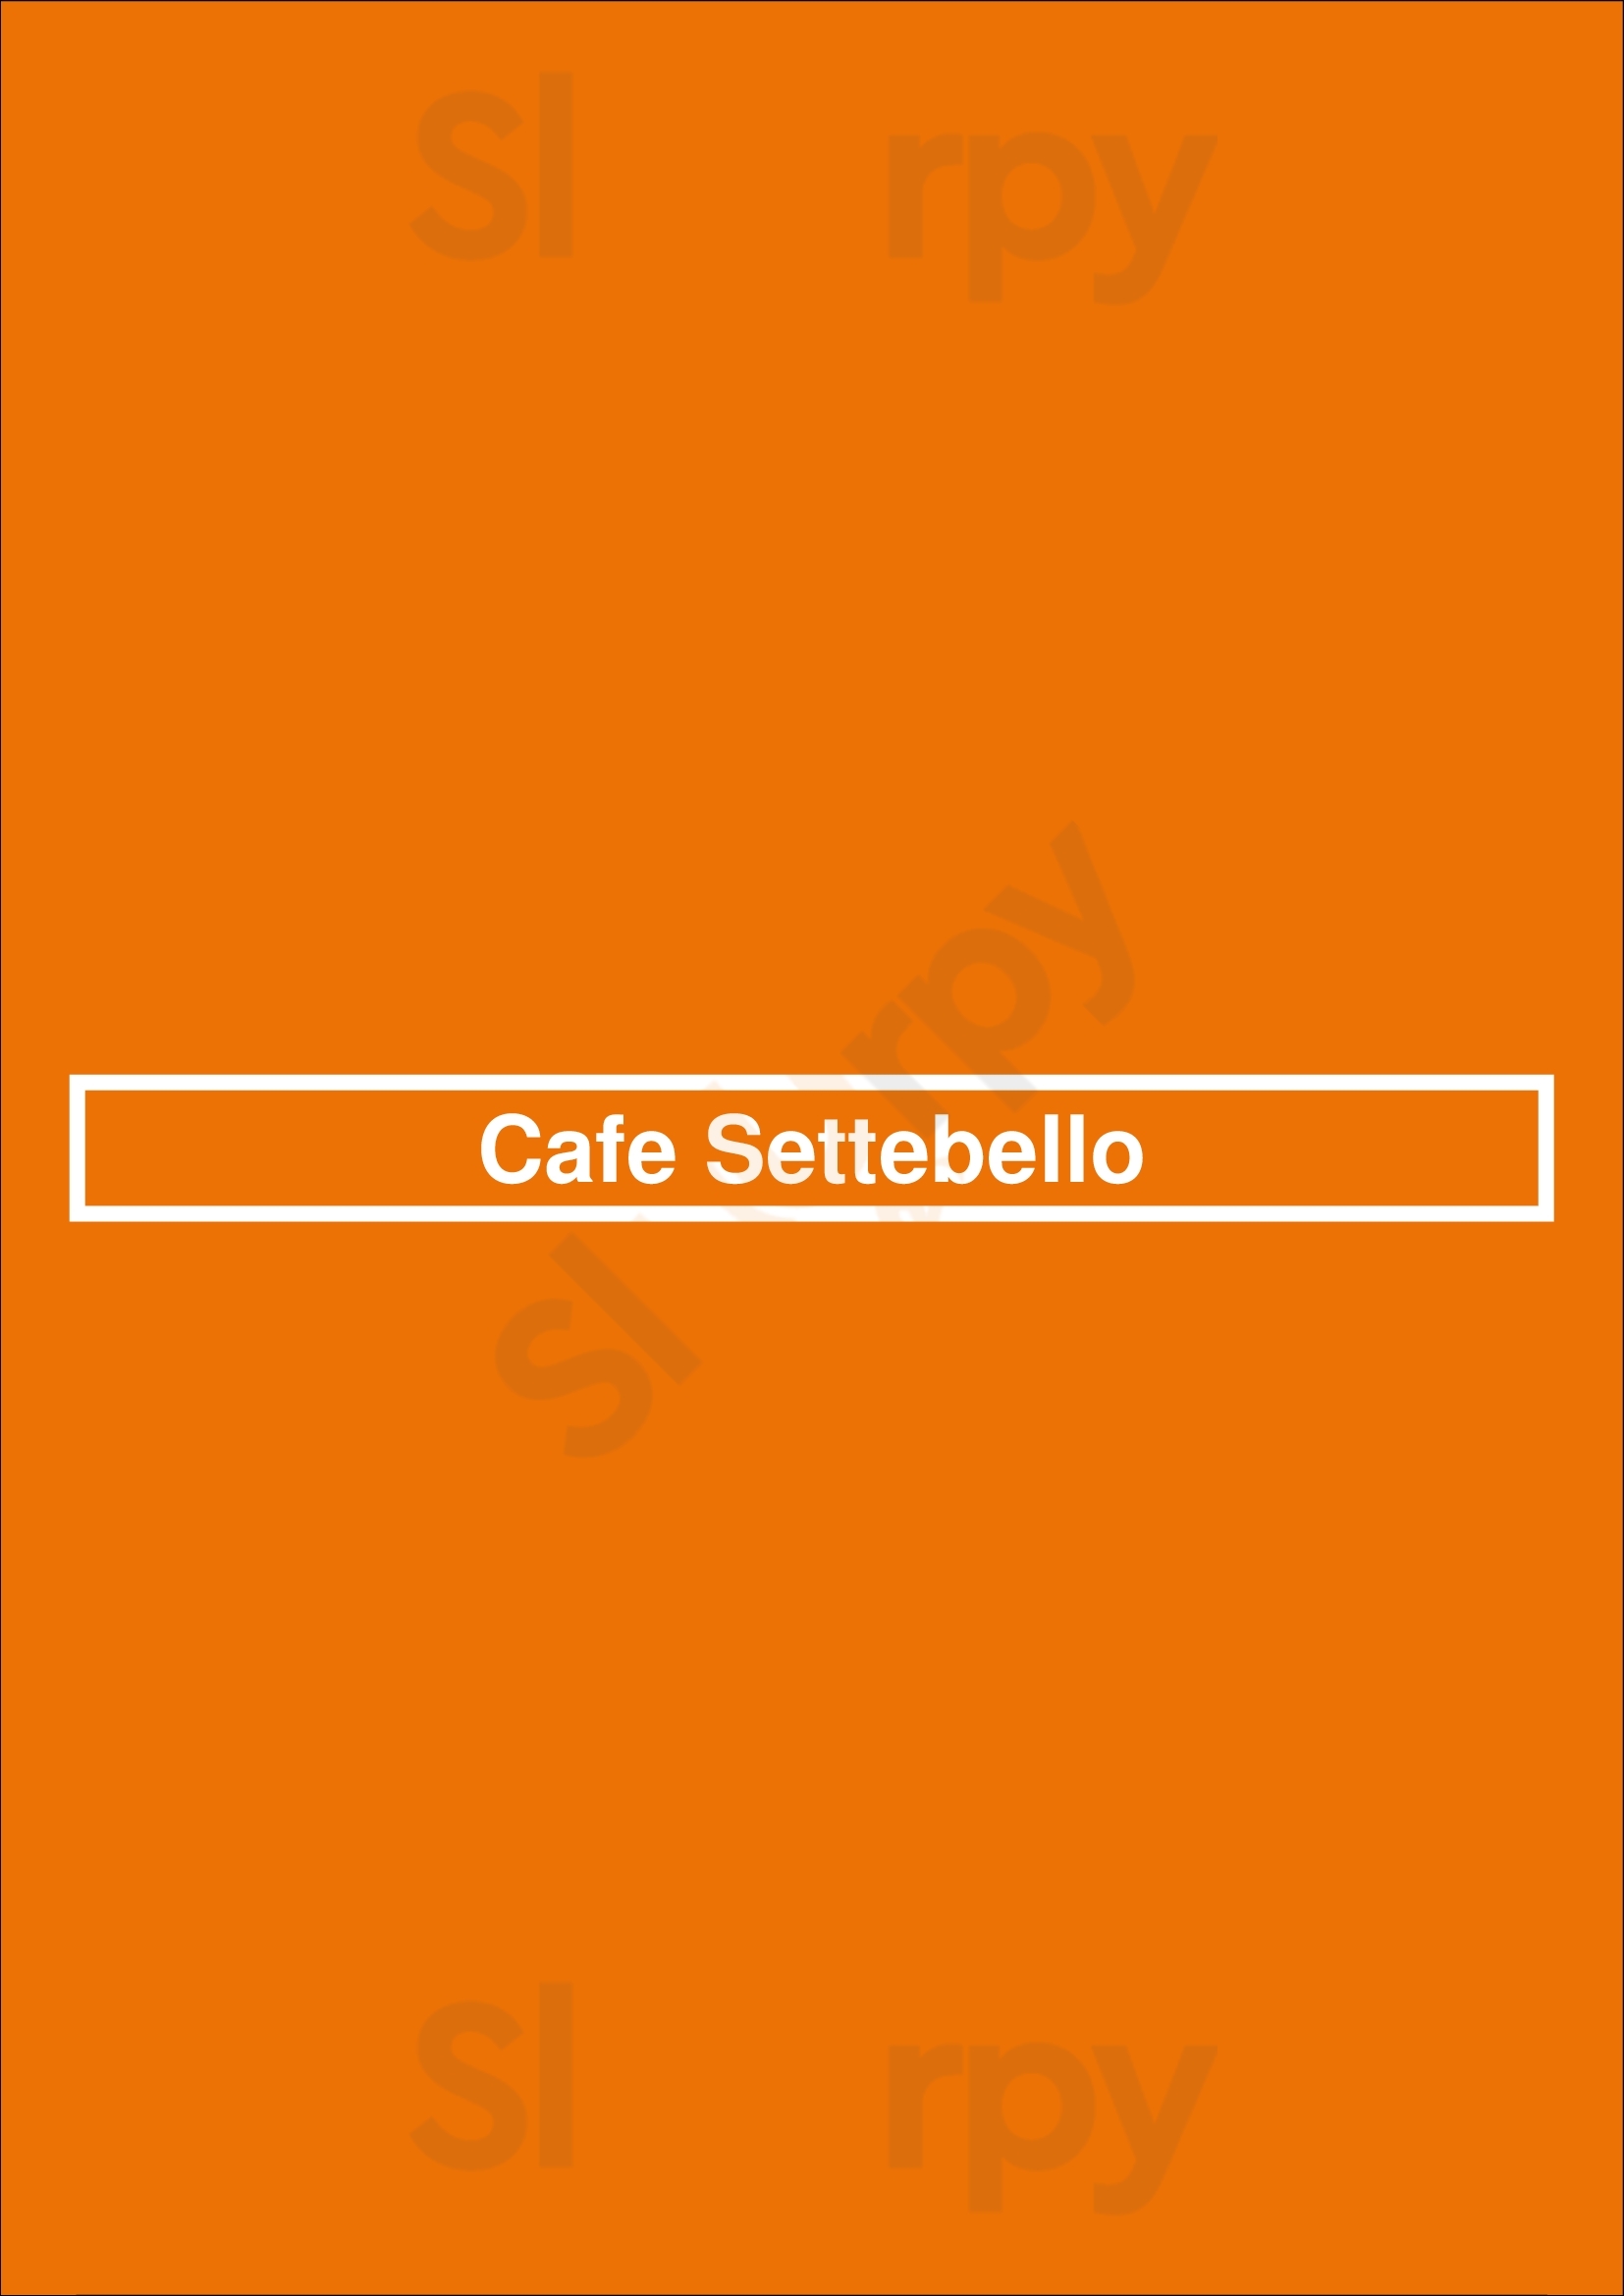 Cafe Settebello Campbelltown Menu - 1